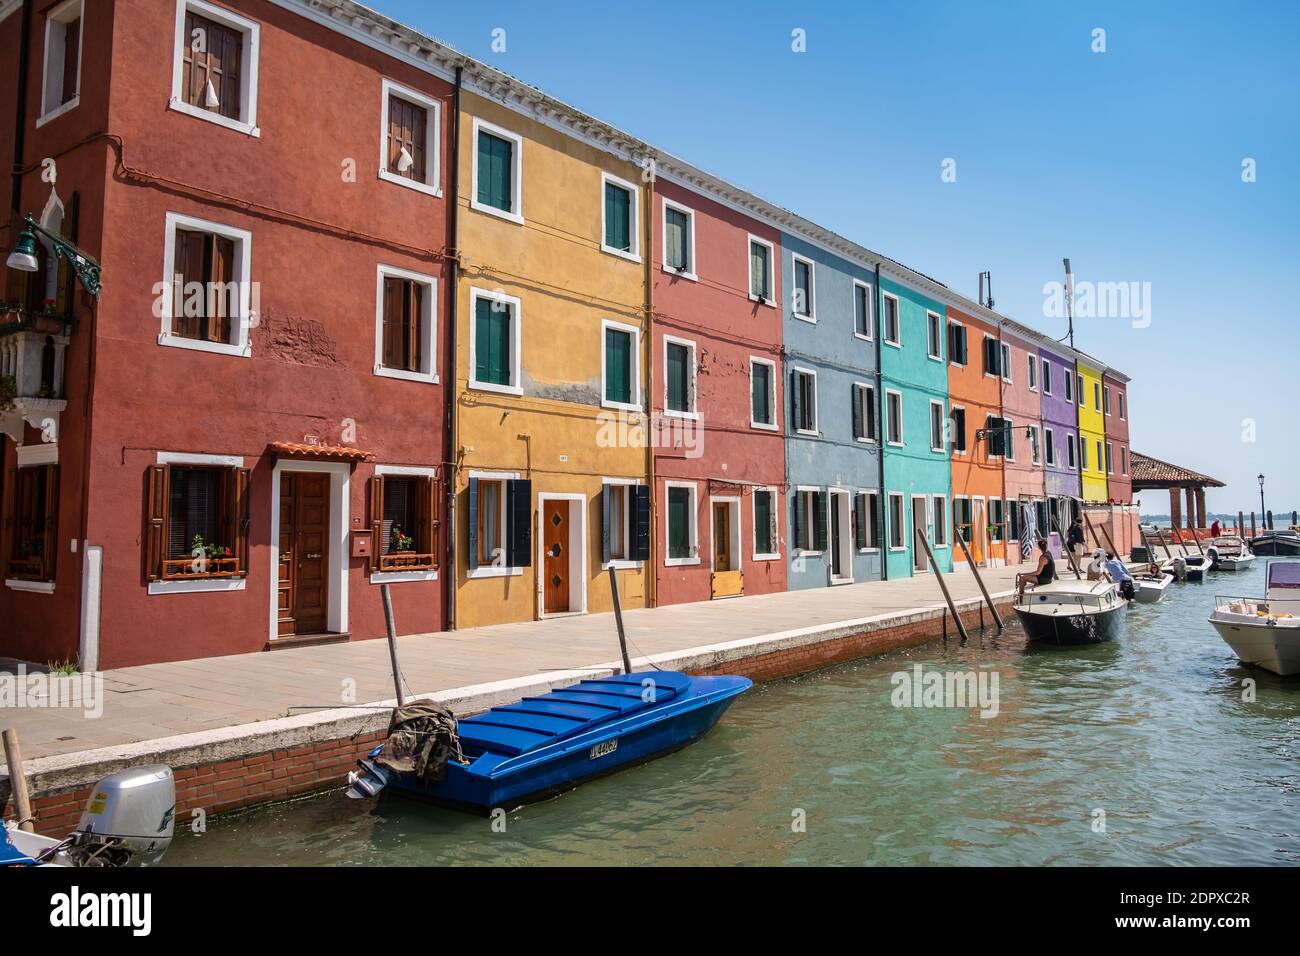 Venice landmark, Burano island canal, colorful houses and boats Stock Photo